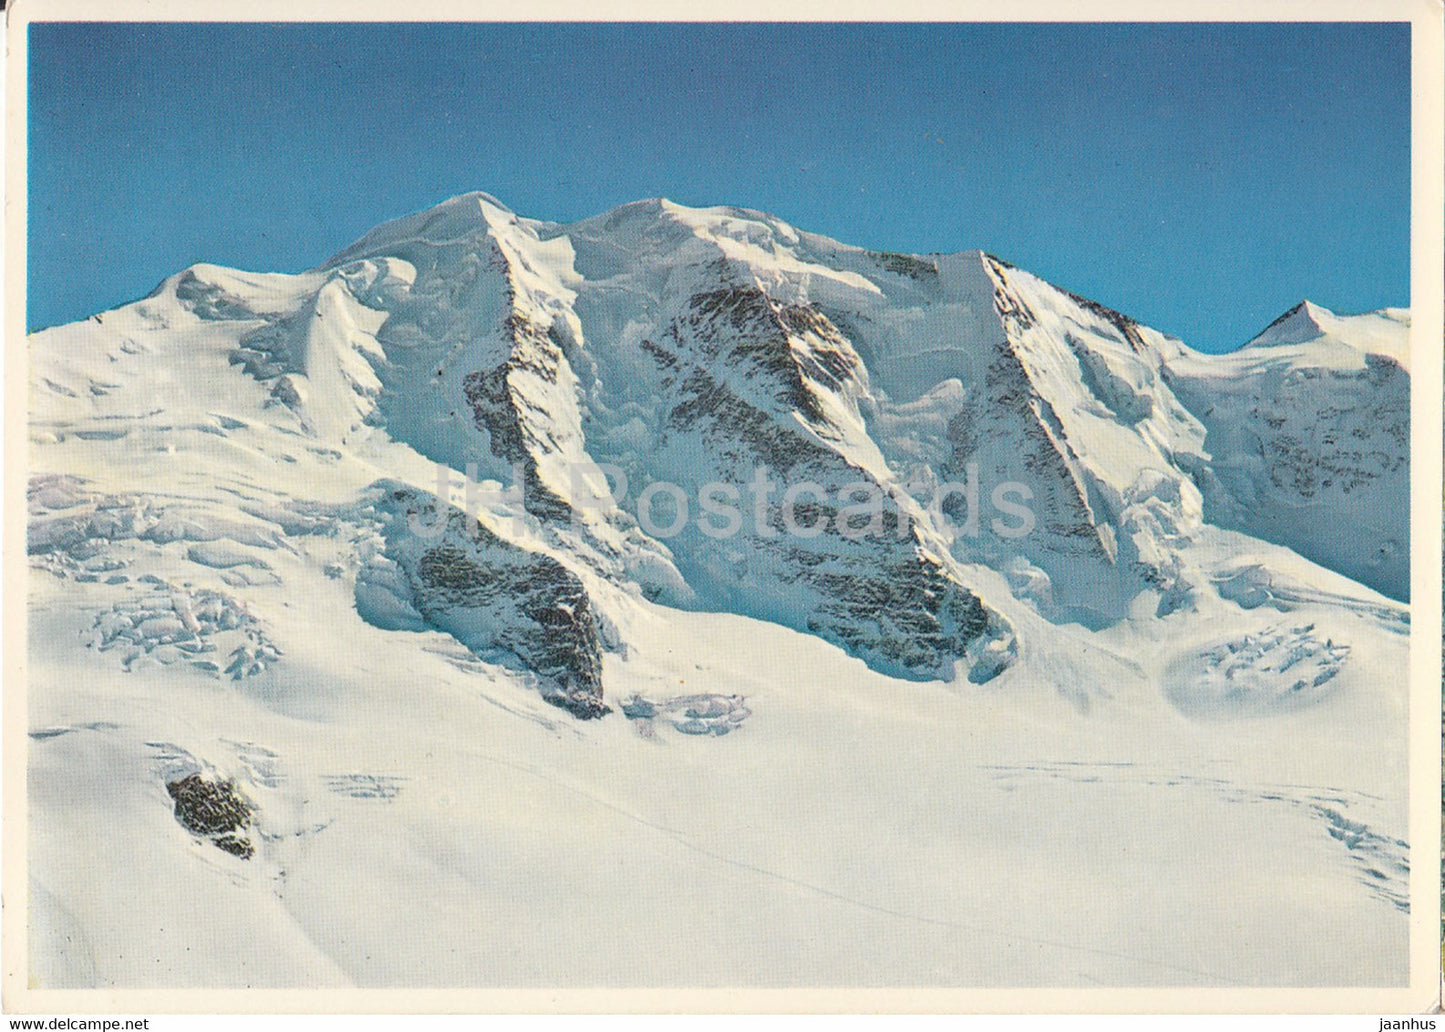 Piz Palu - Pension Berninahaus - Feldpost - 1992 - Switzerland - used - JH Postcards